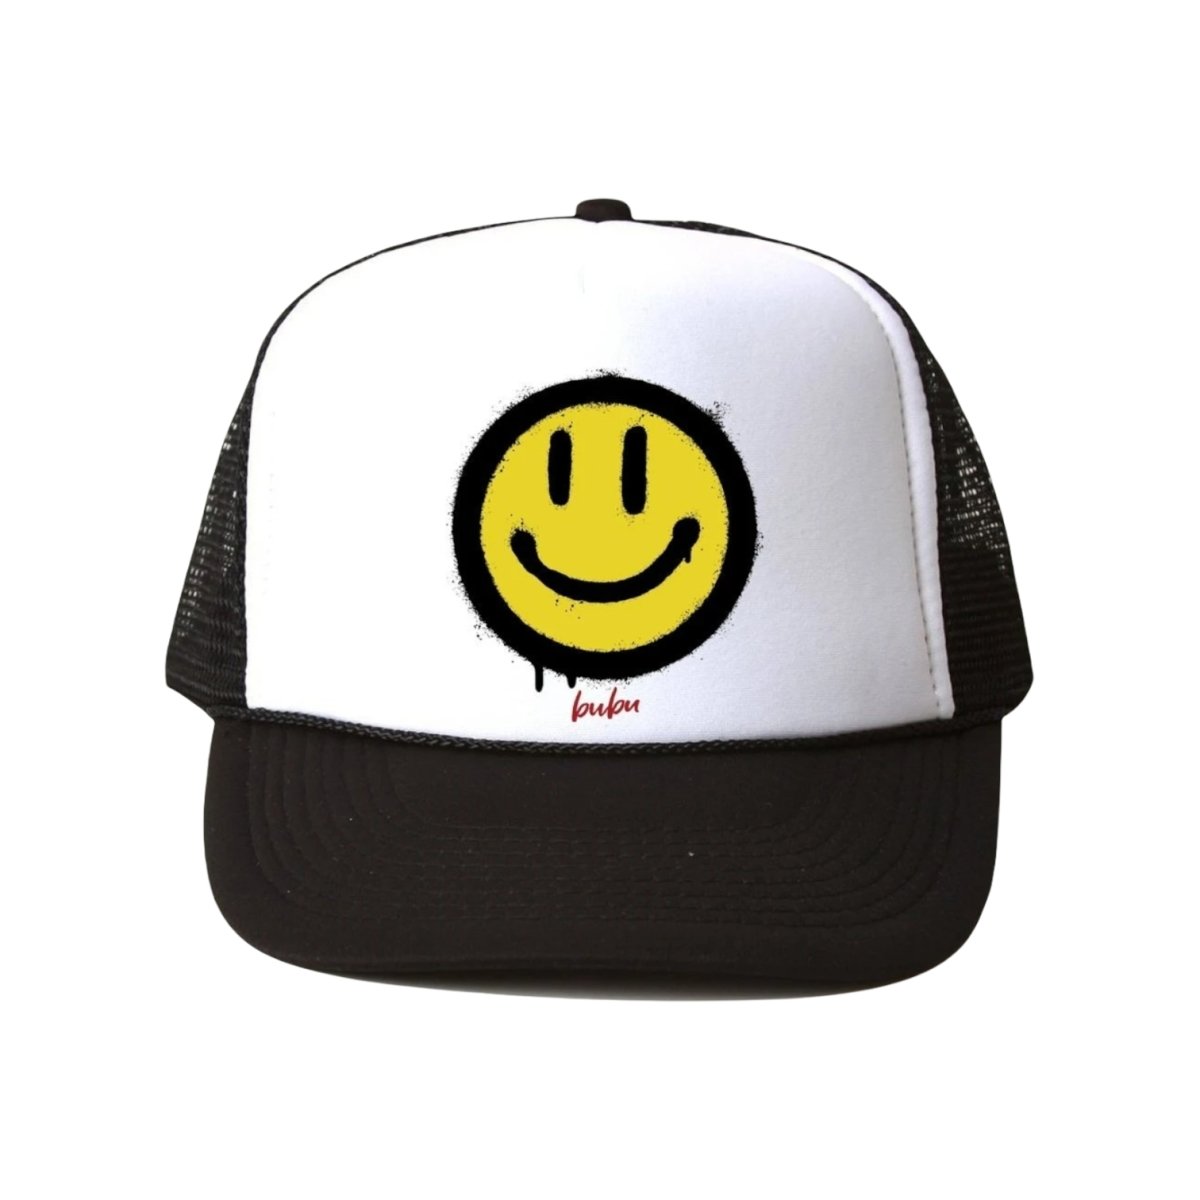 ALL SMILES TRUCKER HATS - HATS